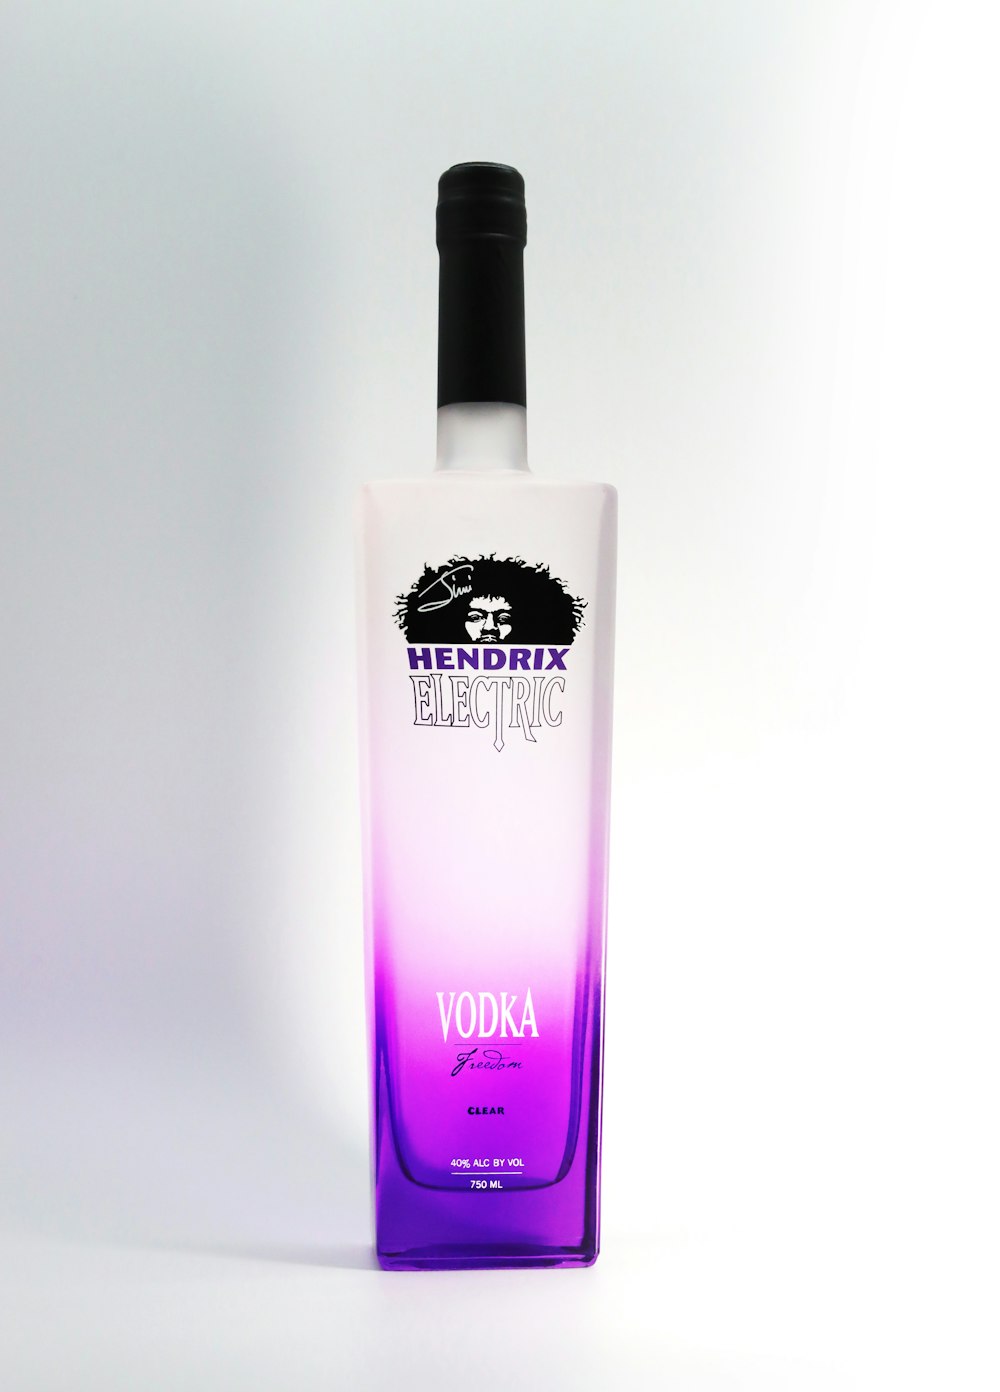 a bottle of vodka on a white background